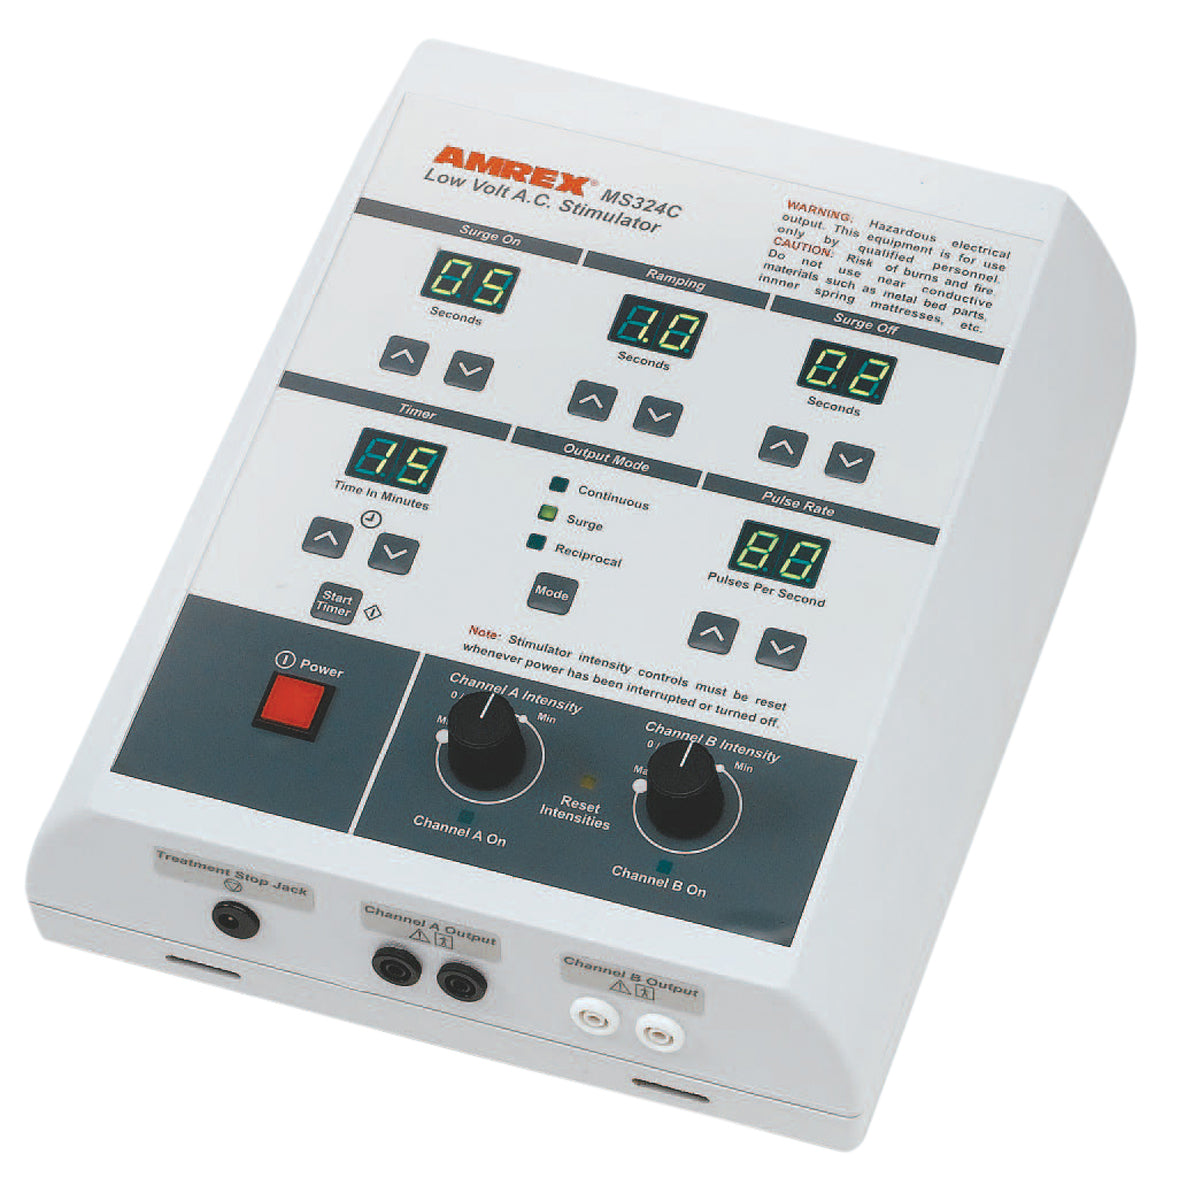 Muscle Stimulator Dual Ch., Low Volt AC - W50522 - Amrex - 01